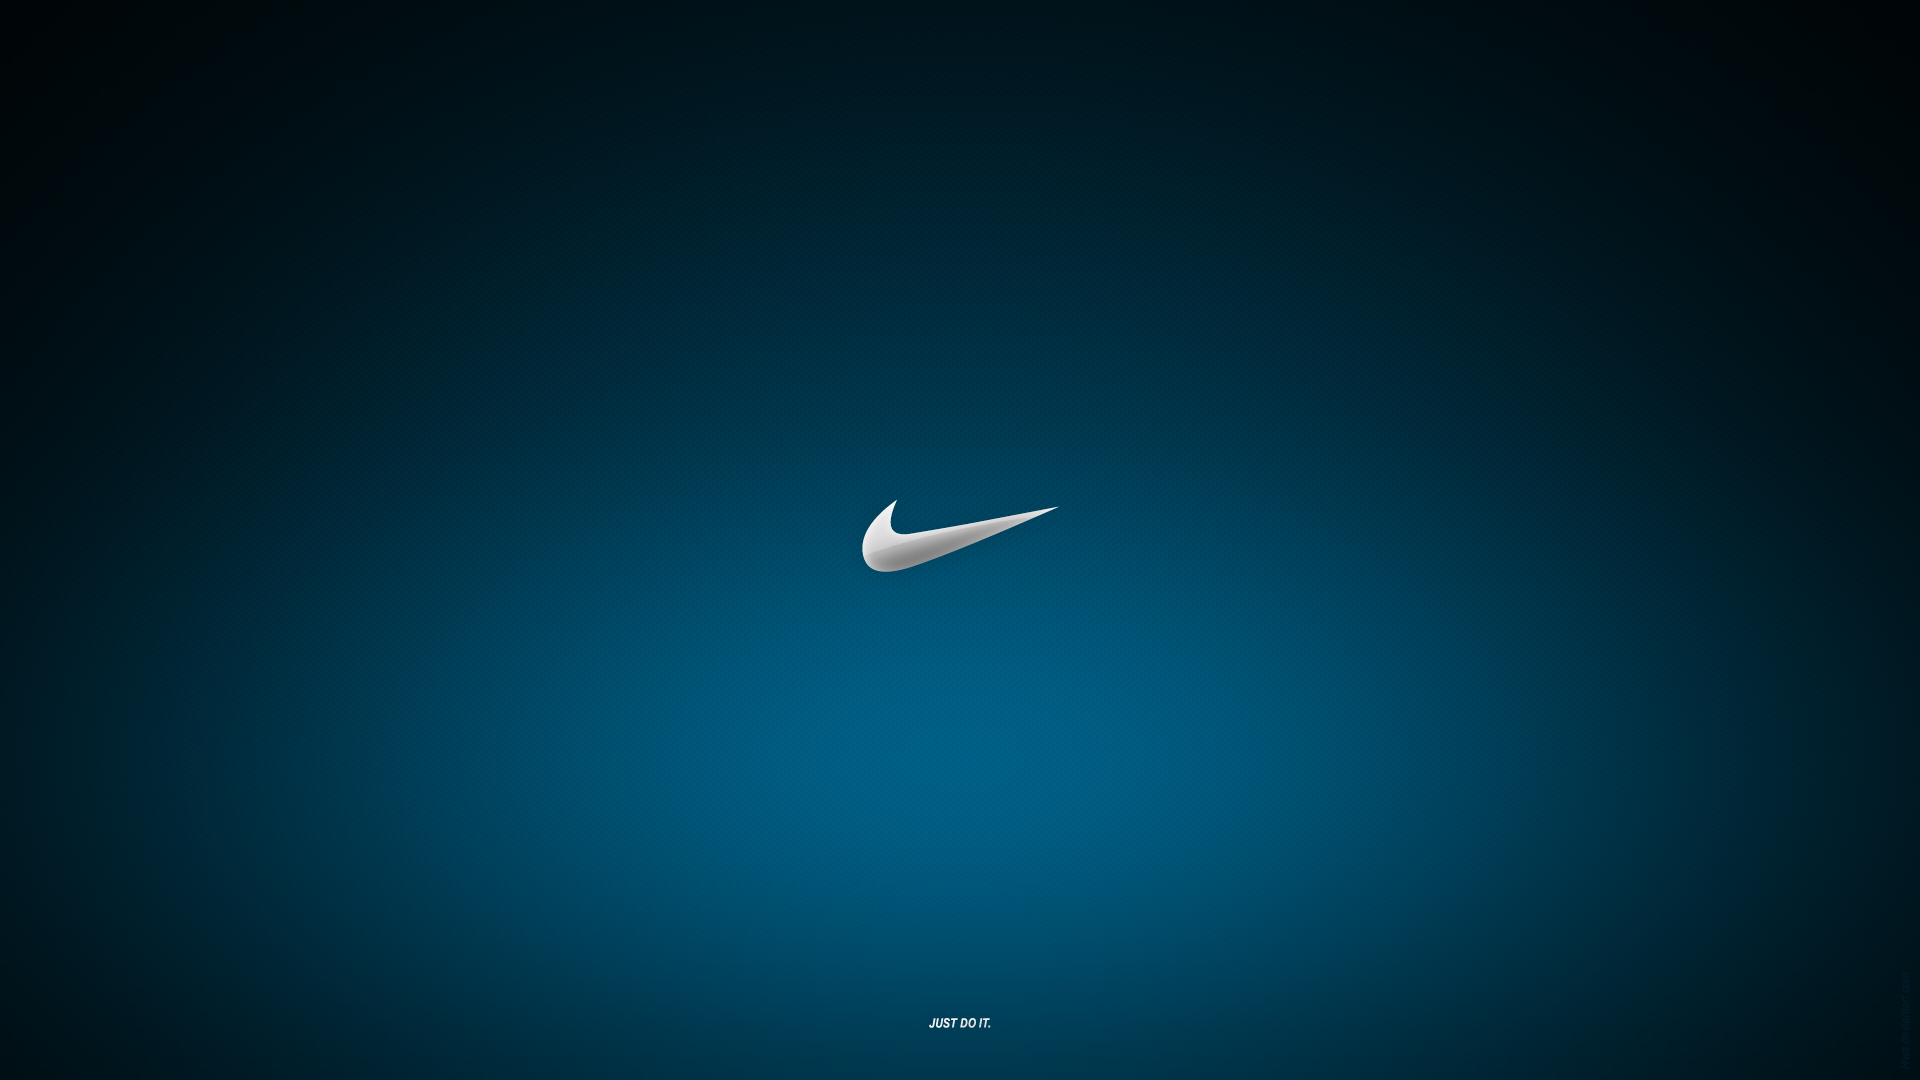 Nike Wallpaper HD 1080p Imagebank Biz